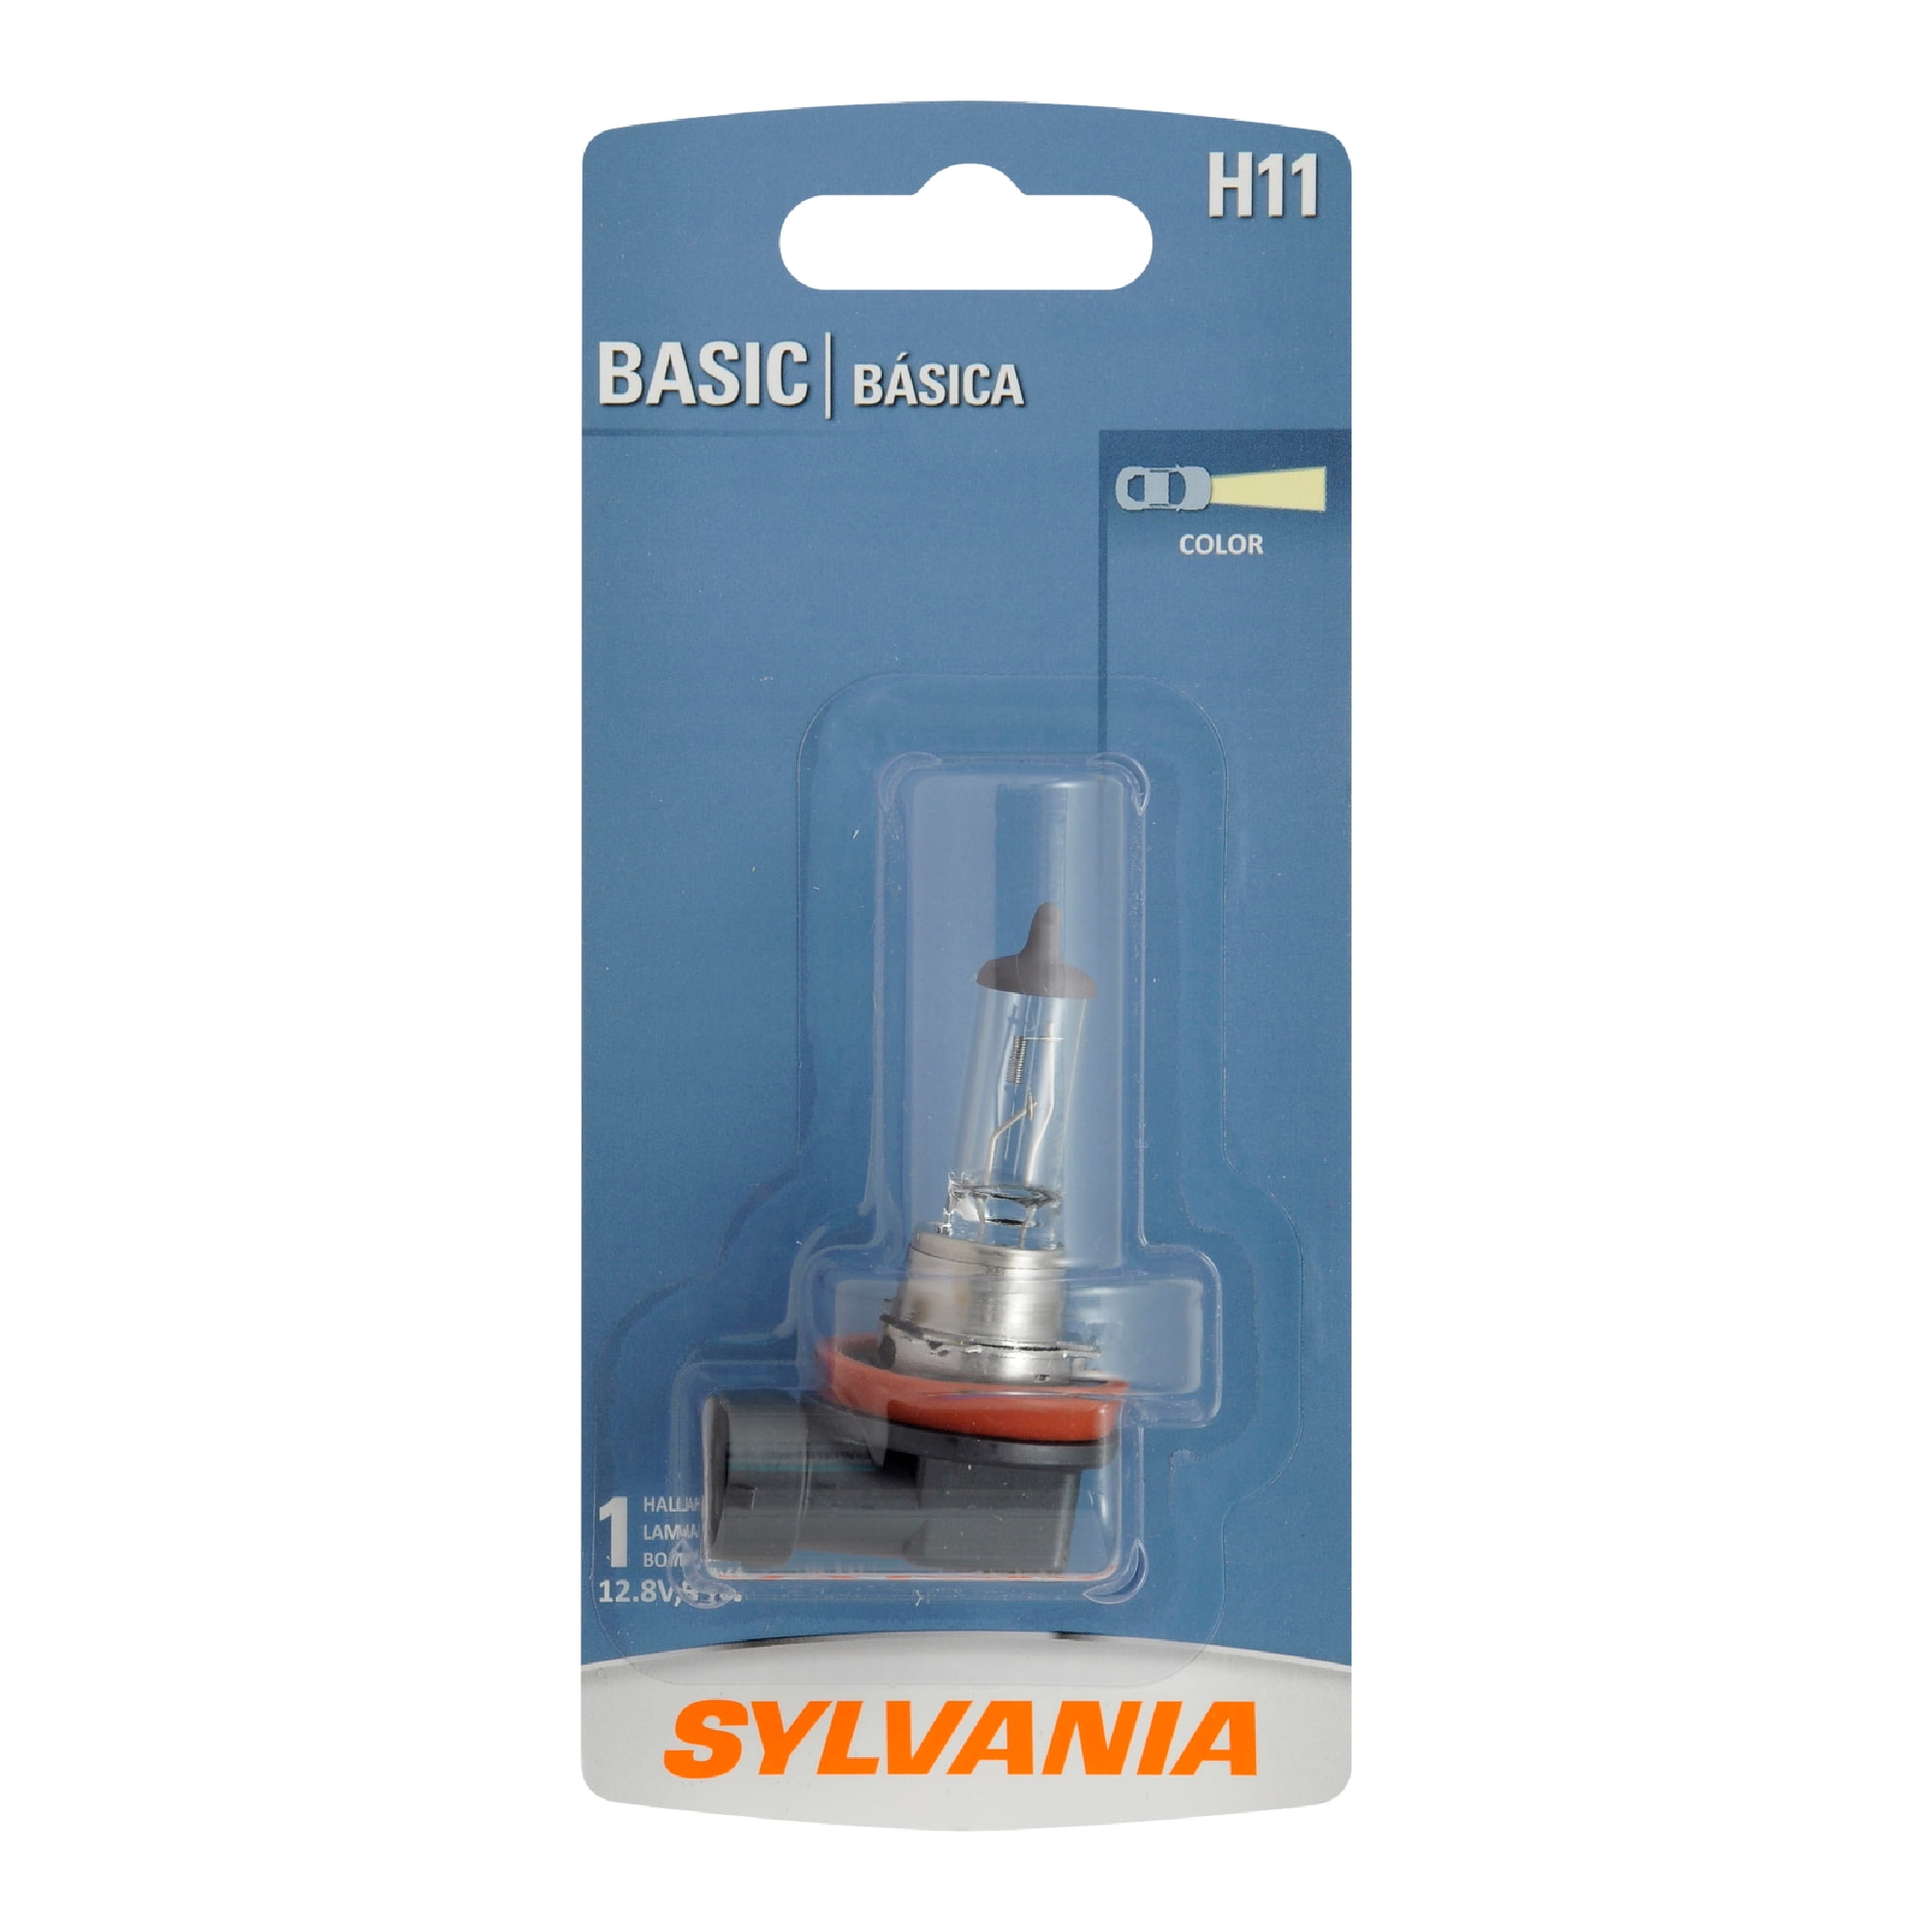 Sylvania Basic Halogen Headlight Bulb, of 1 -